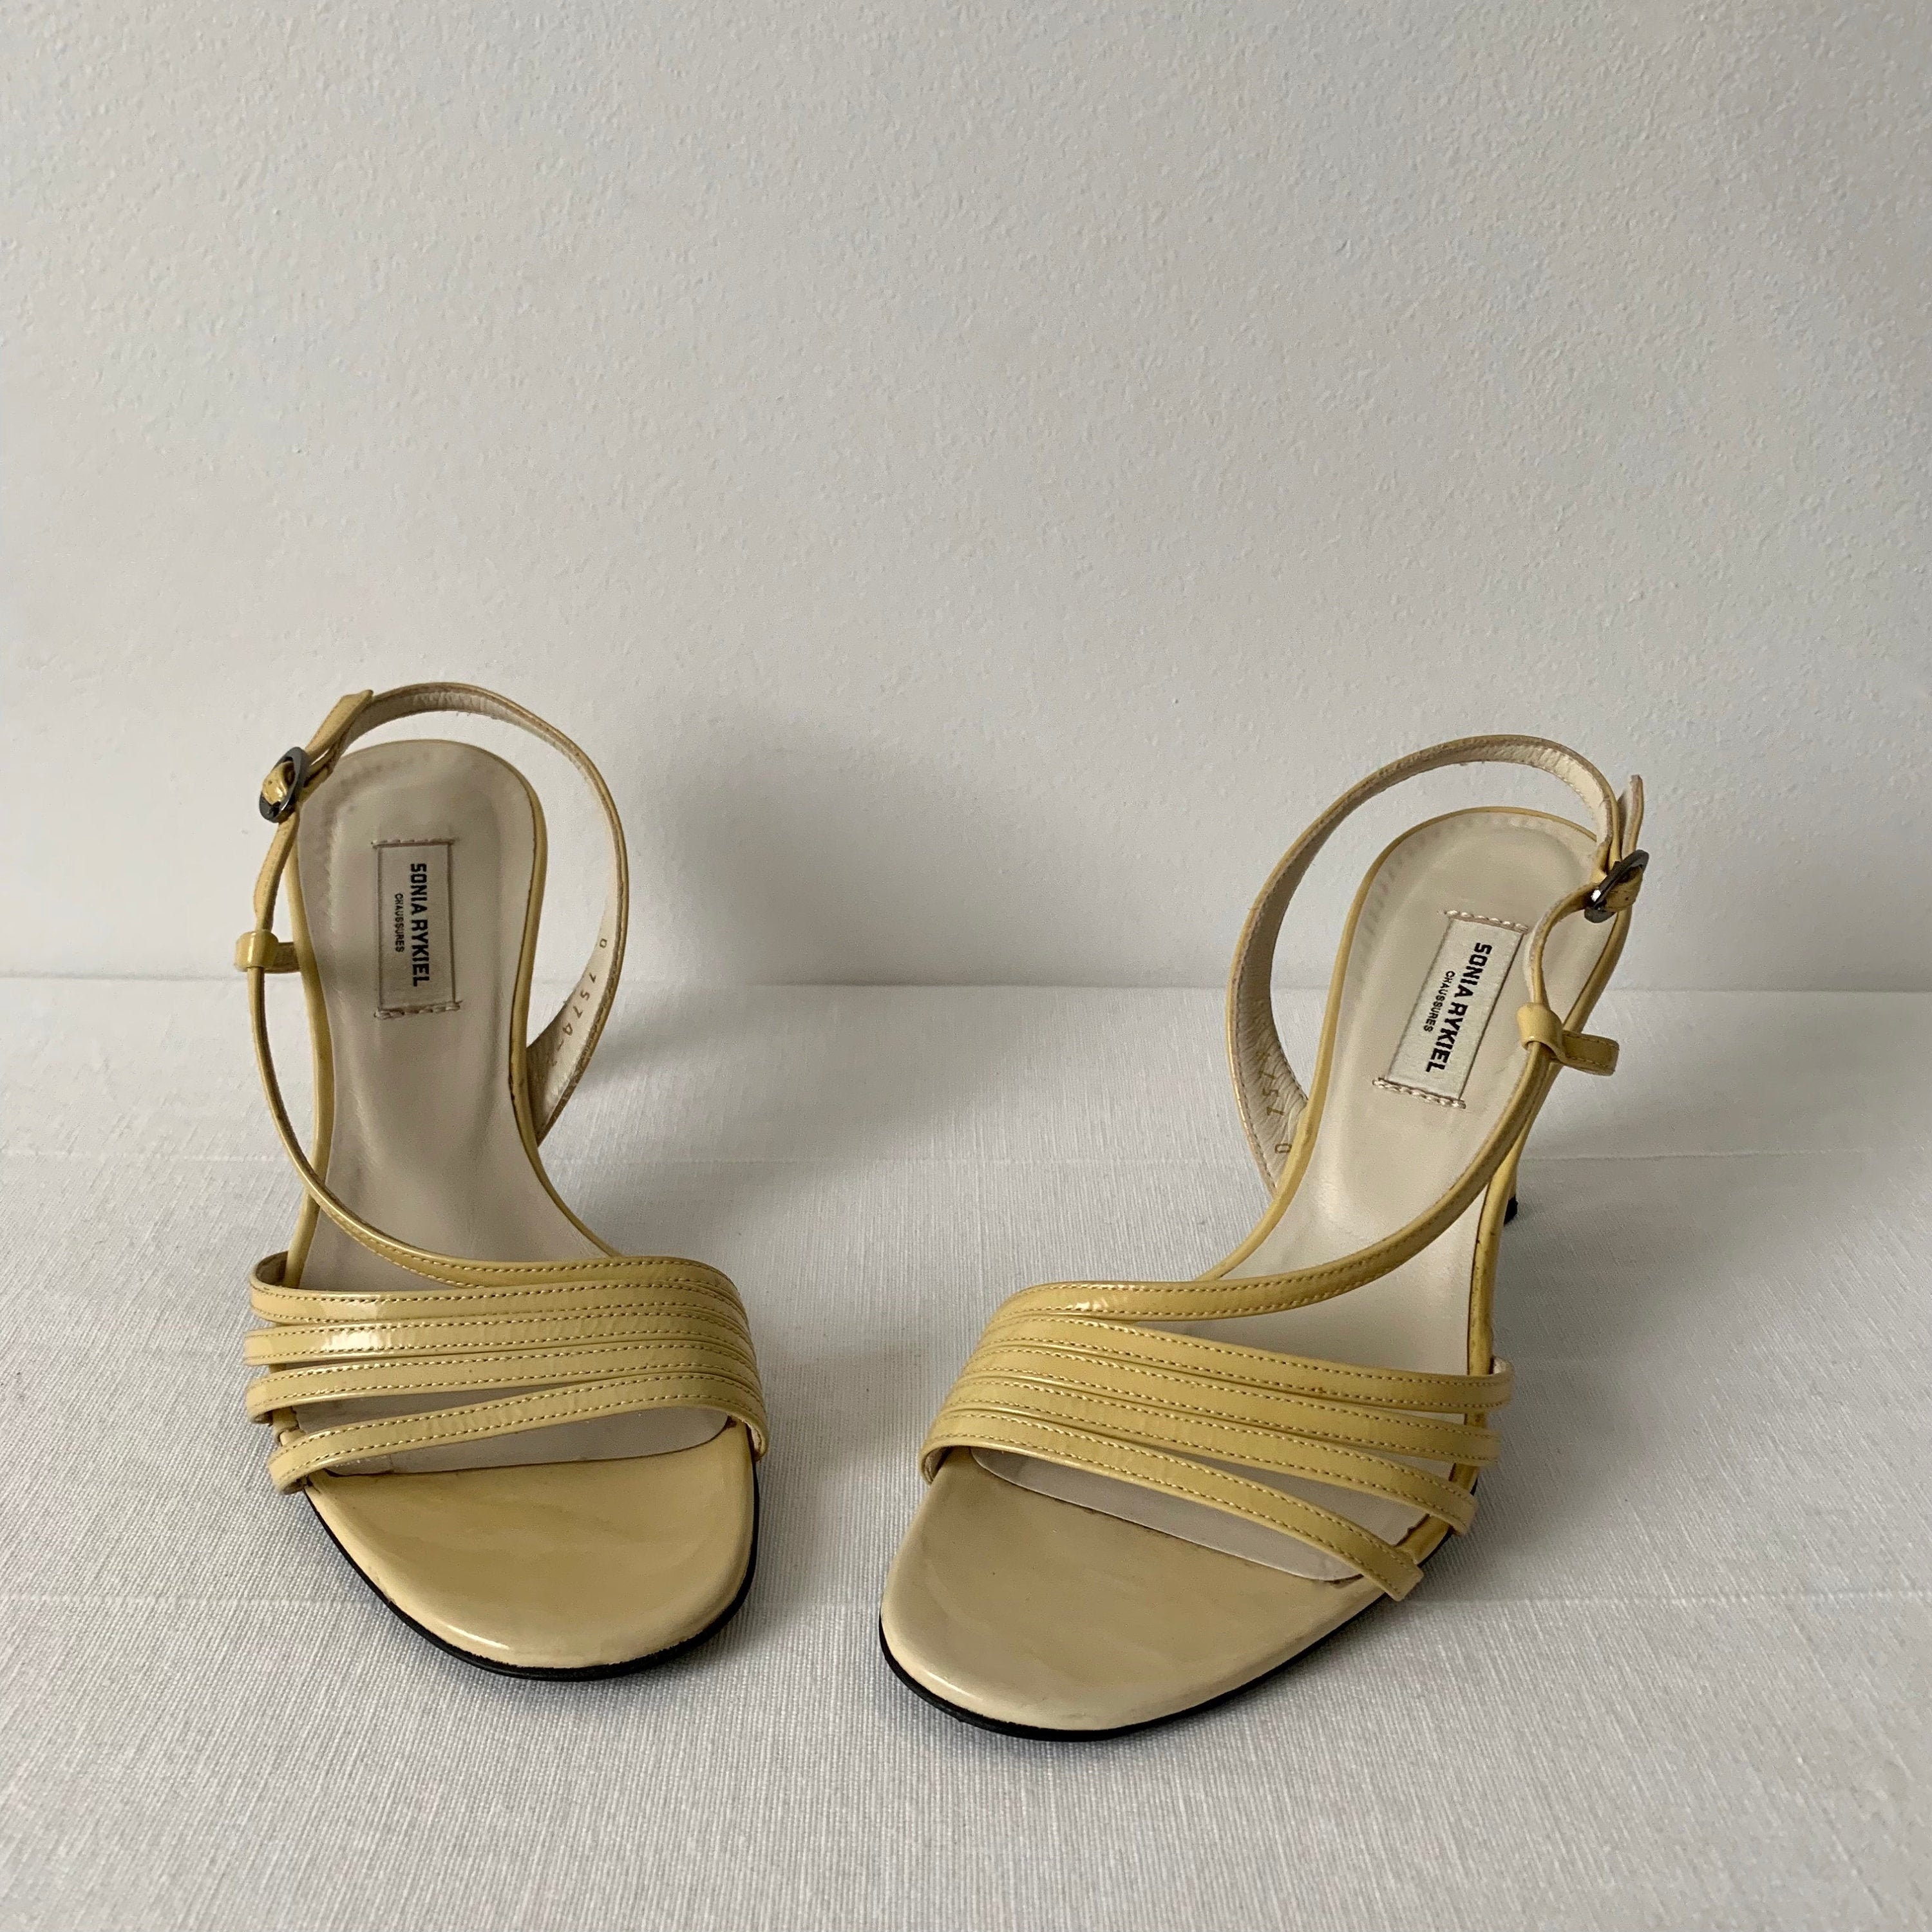 Yellow heels | Ballitoville | Gumtree South Africa